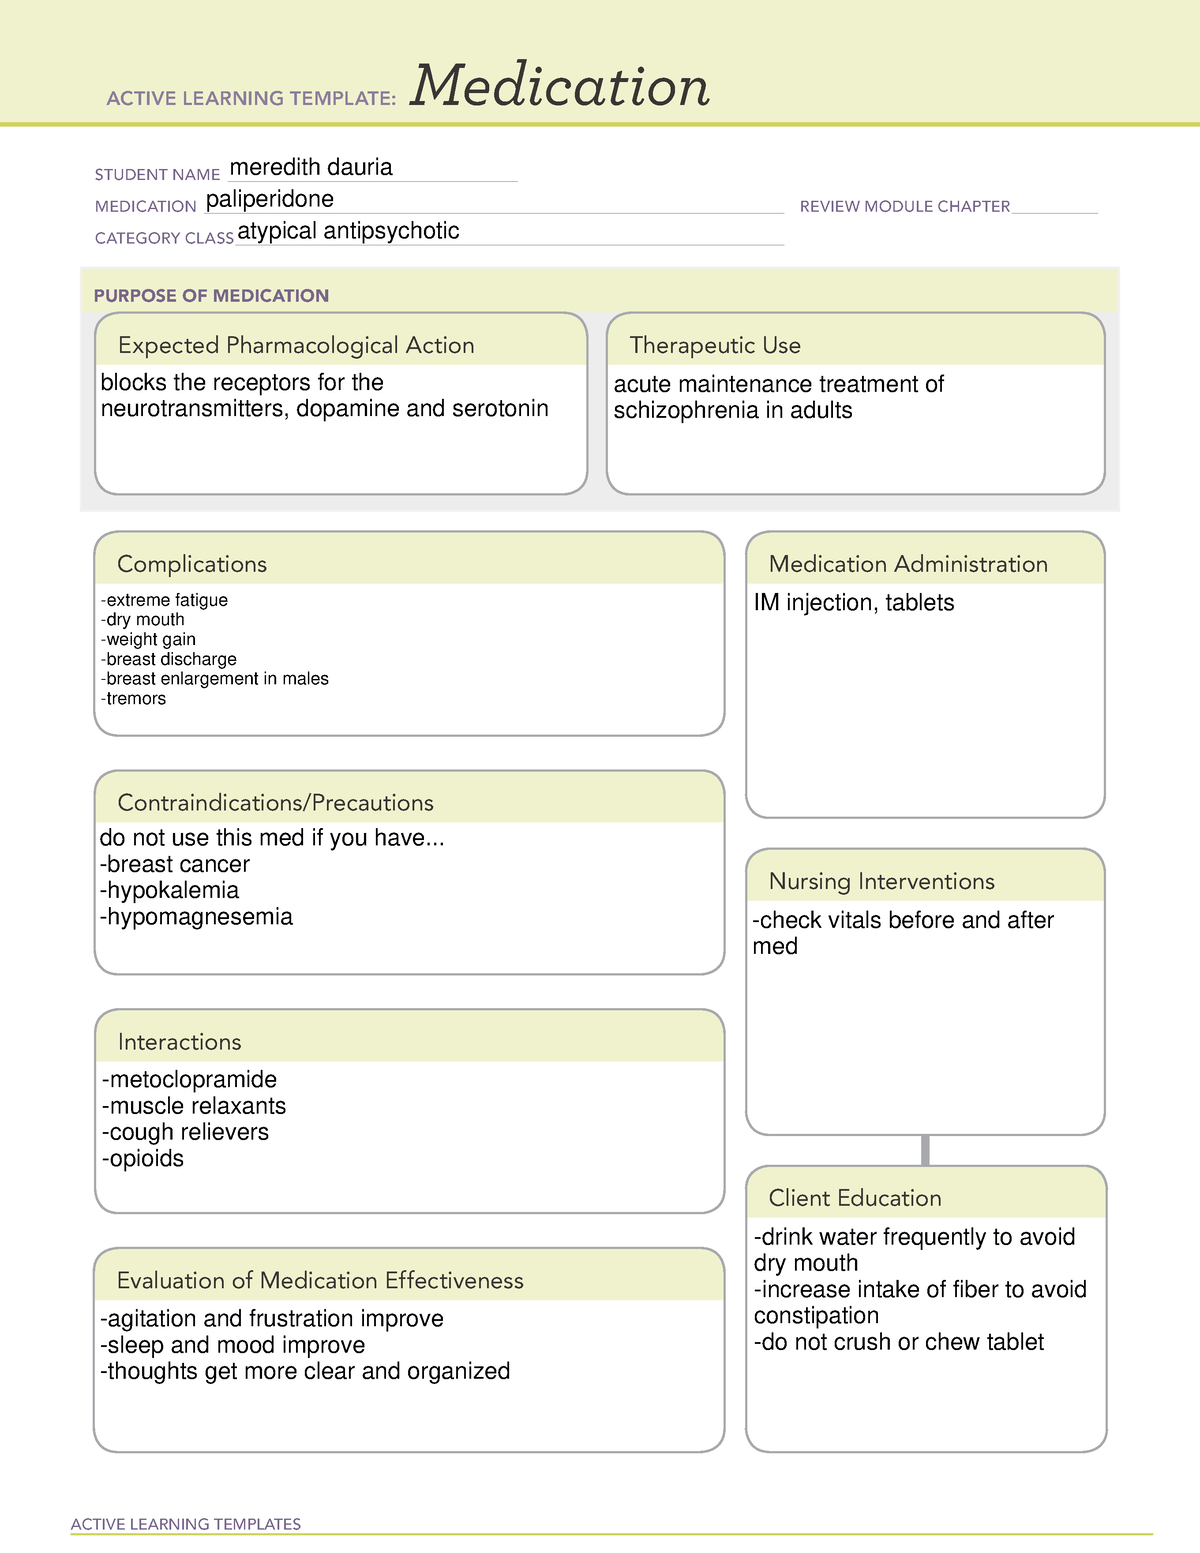 naltrexone-ati-medication-template